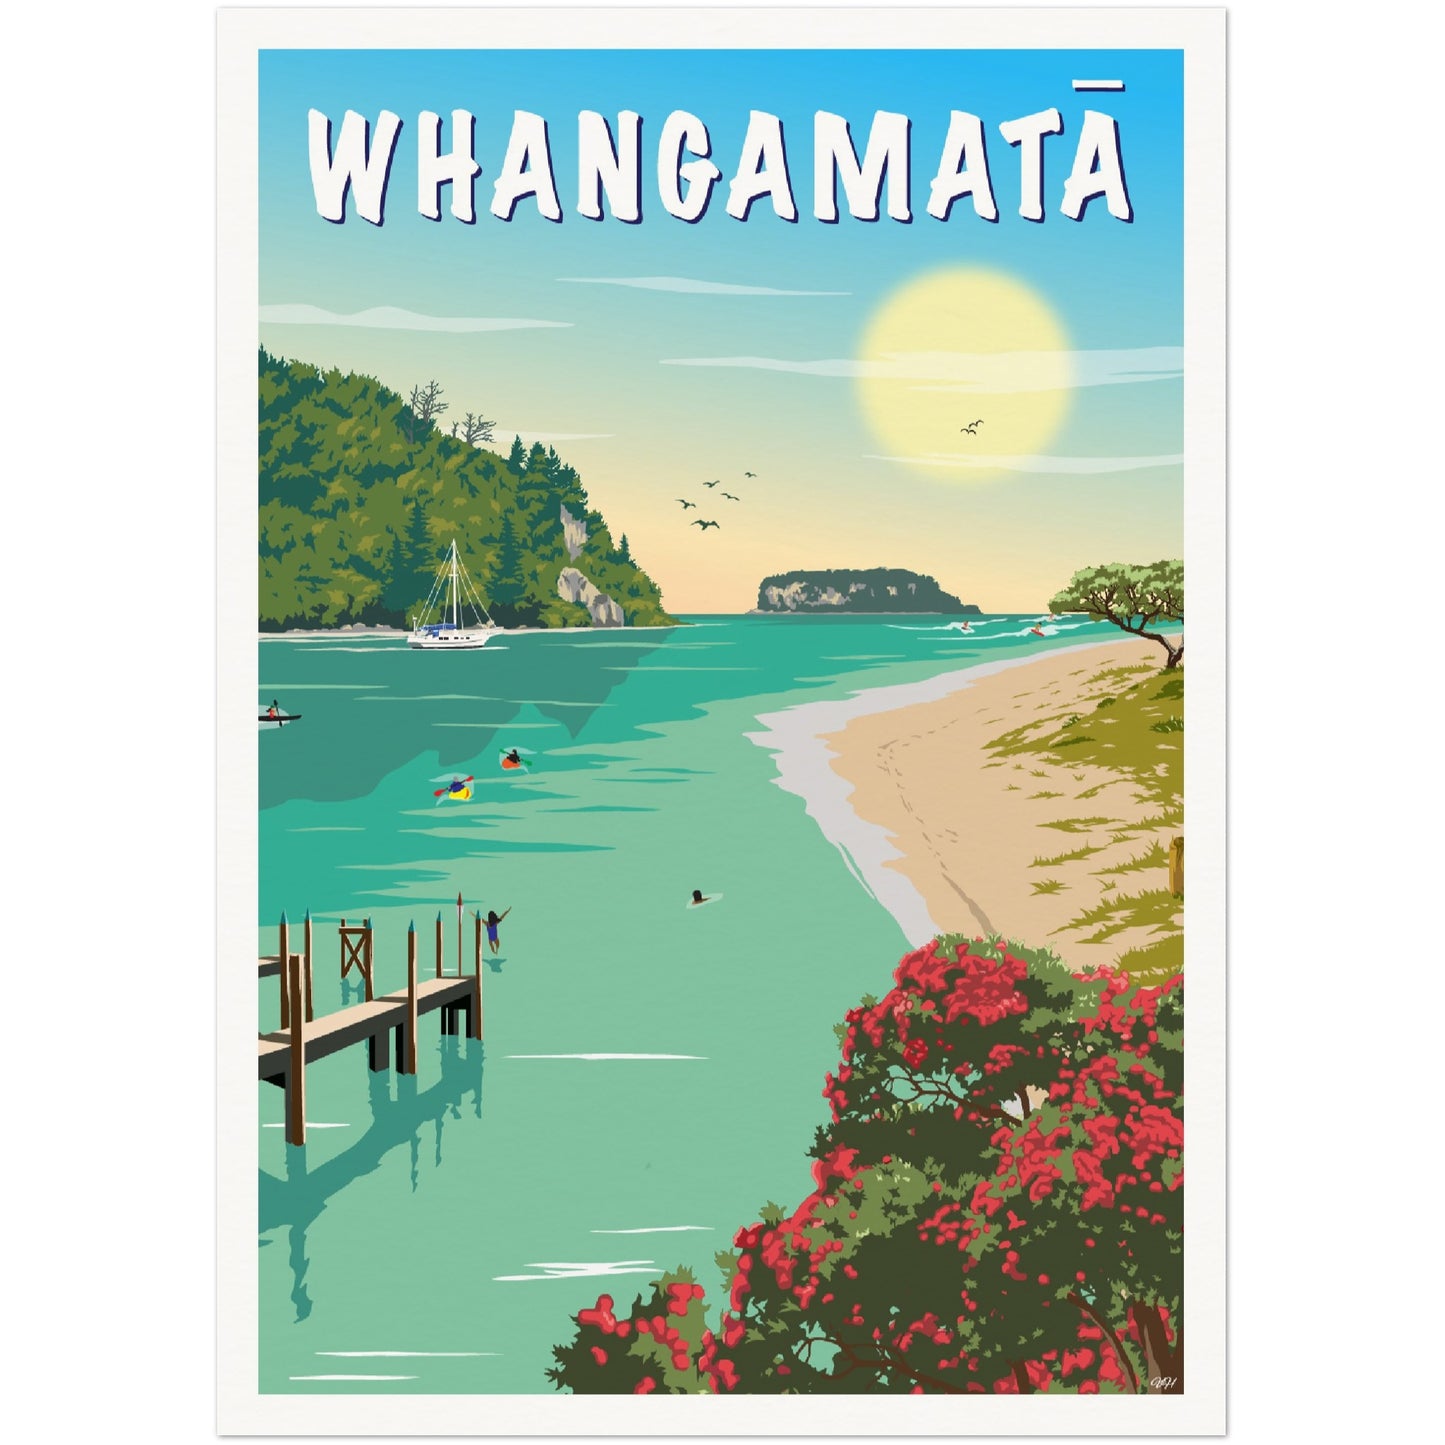 Whangamatā Travel Poster, New Zealand